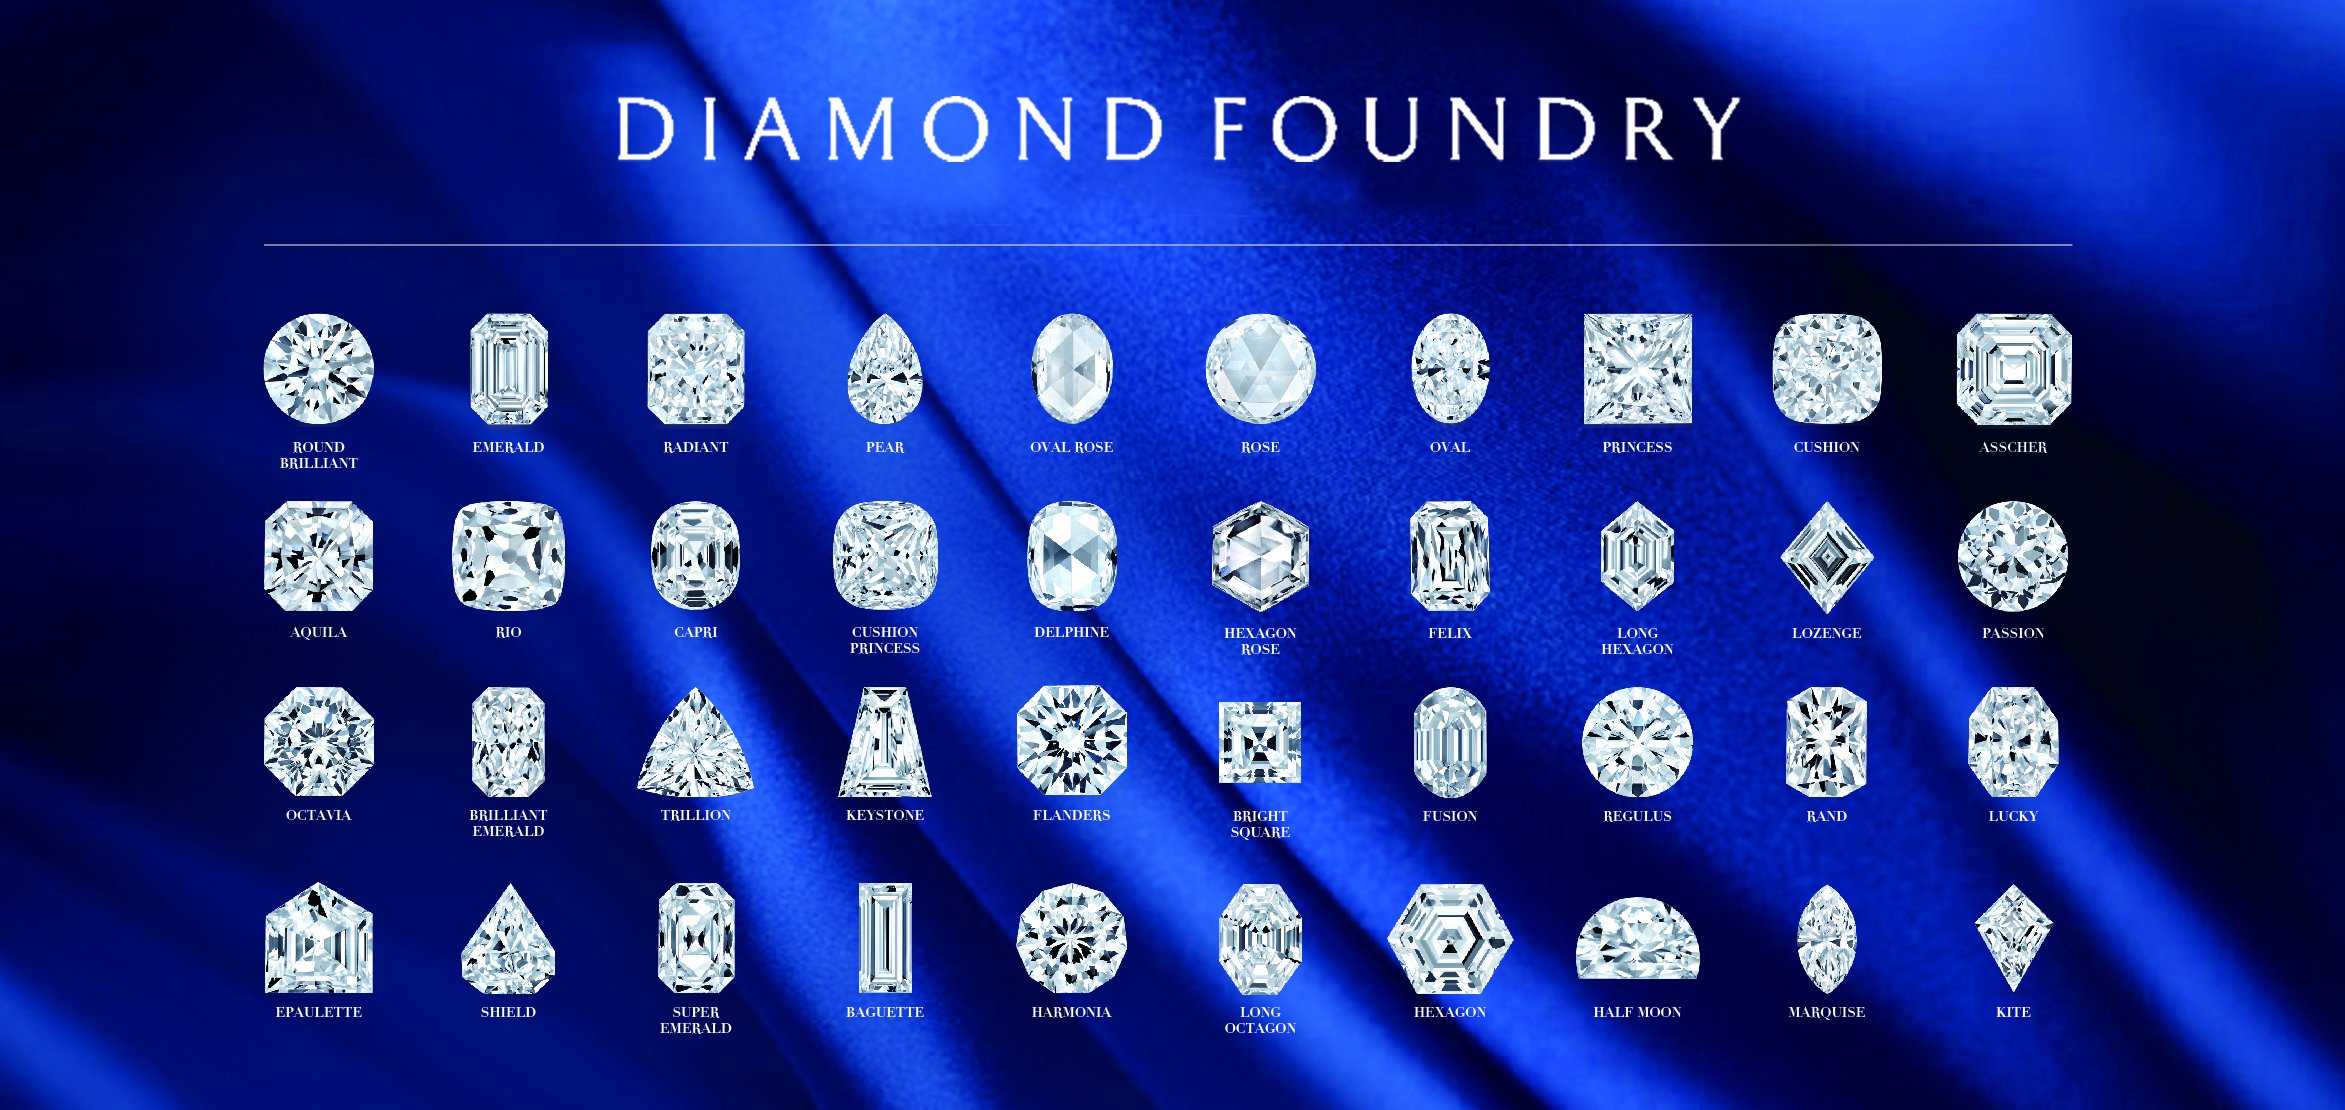 1226_DIAMOND FOUNDRY 40種切割鑽石_必放 (1)